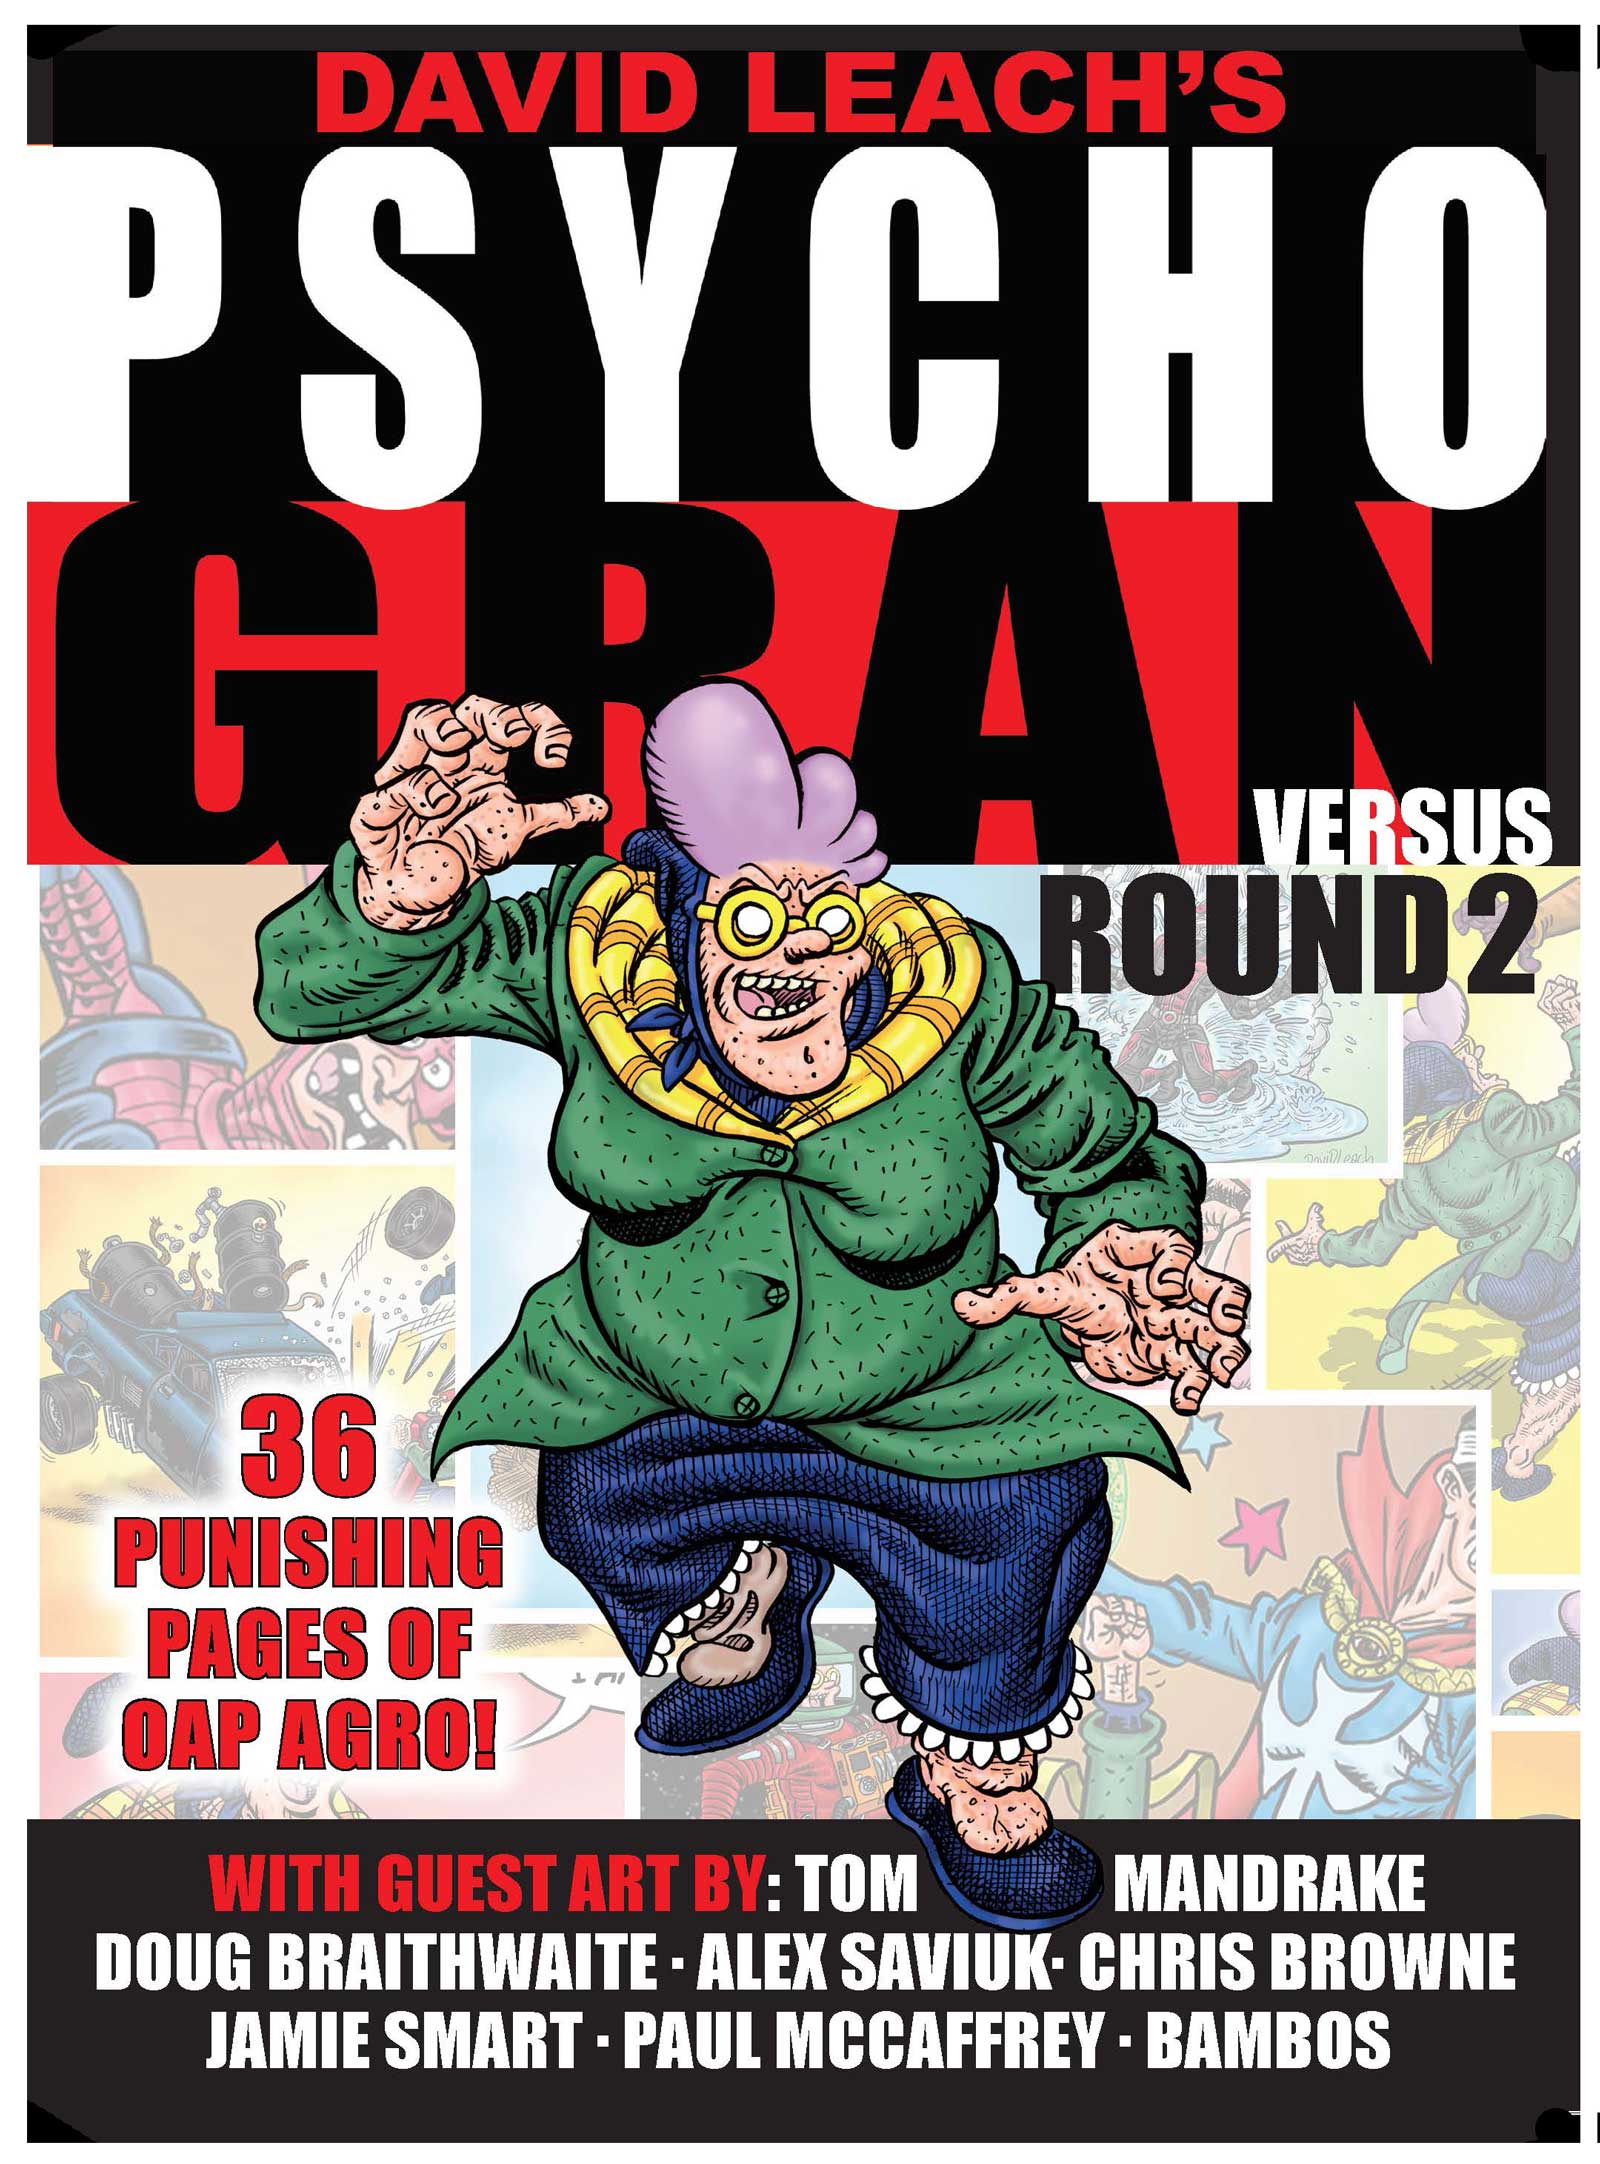 Psycho Gran versus... Round 2! - Cover